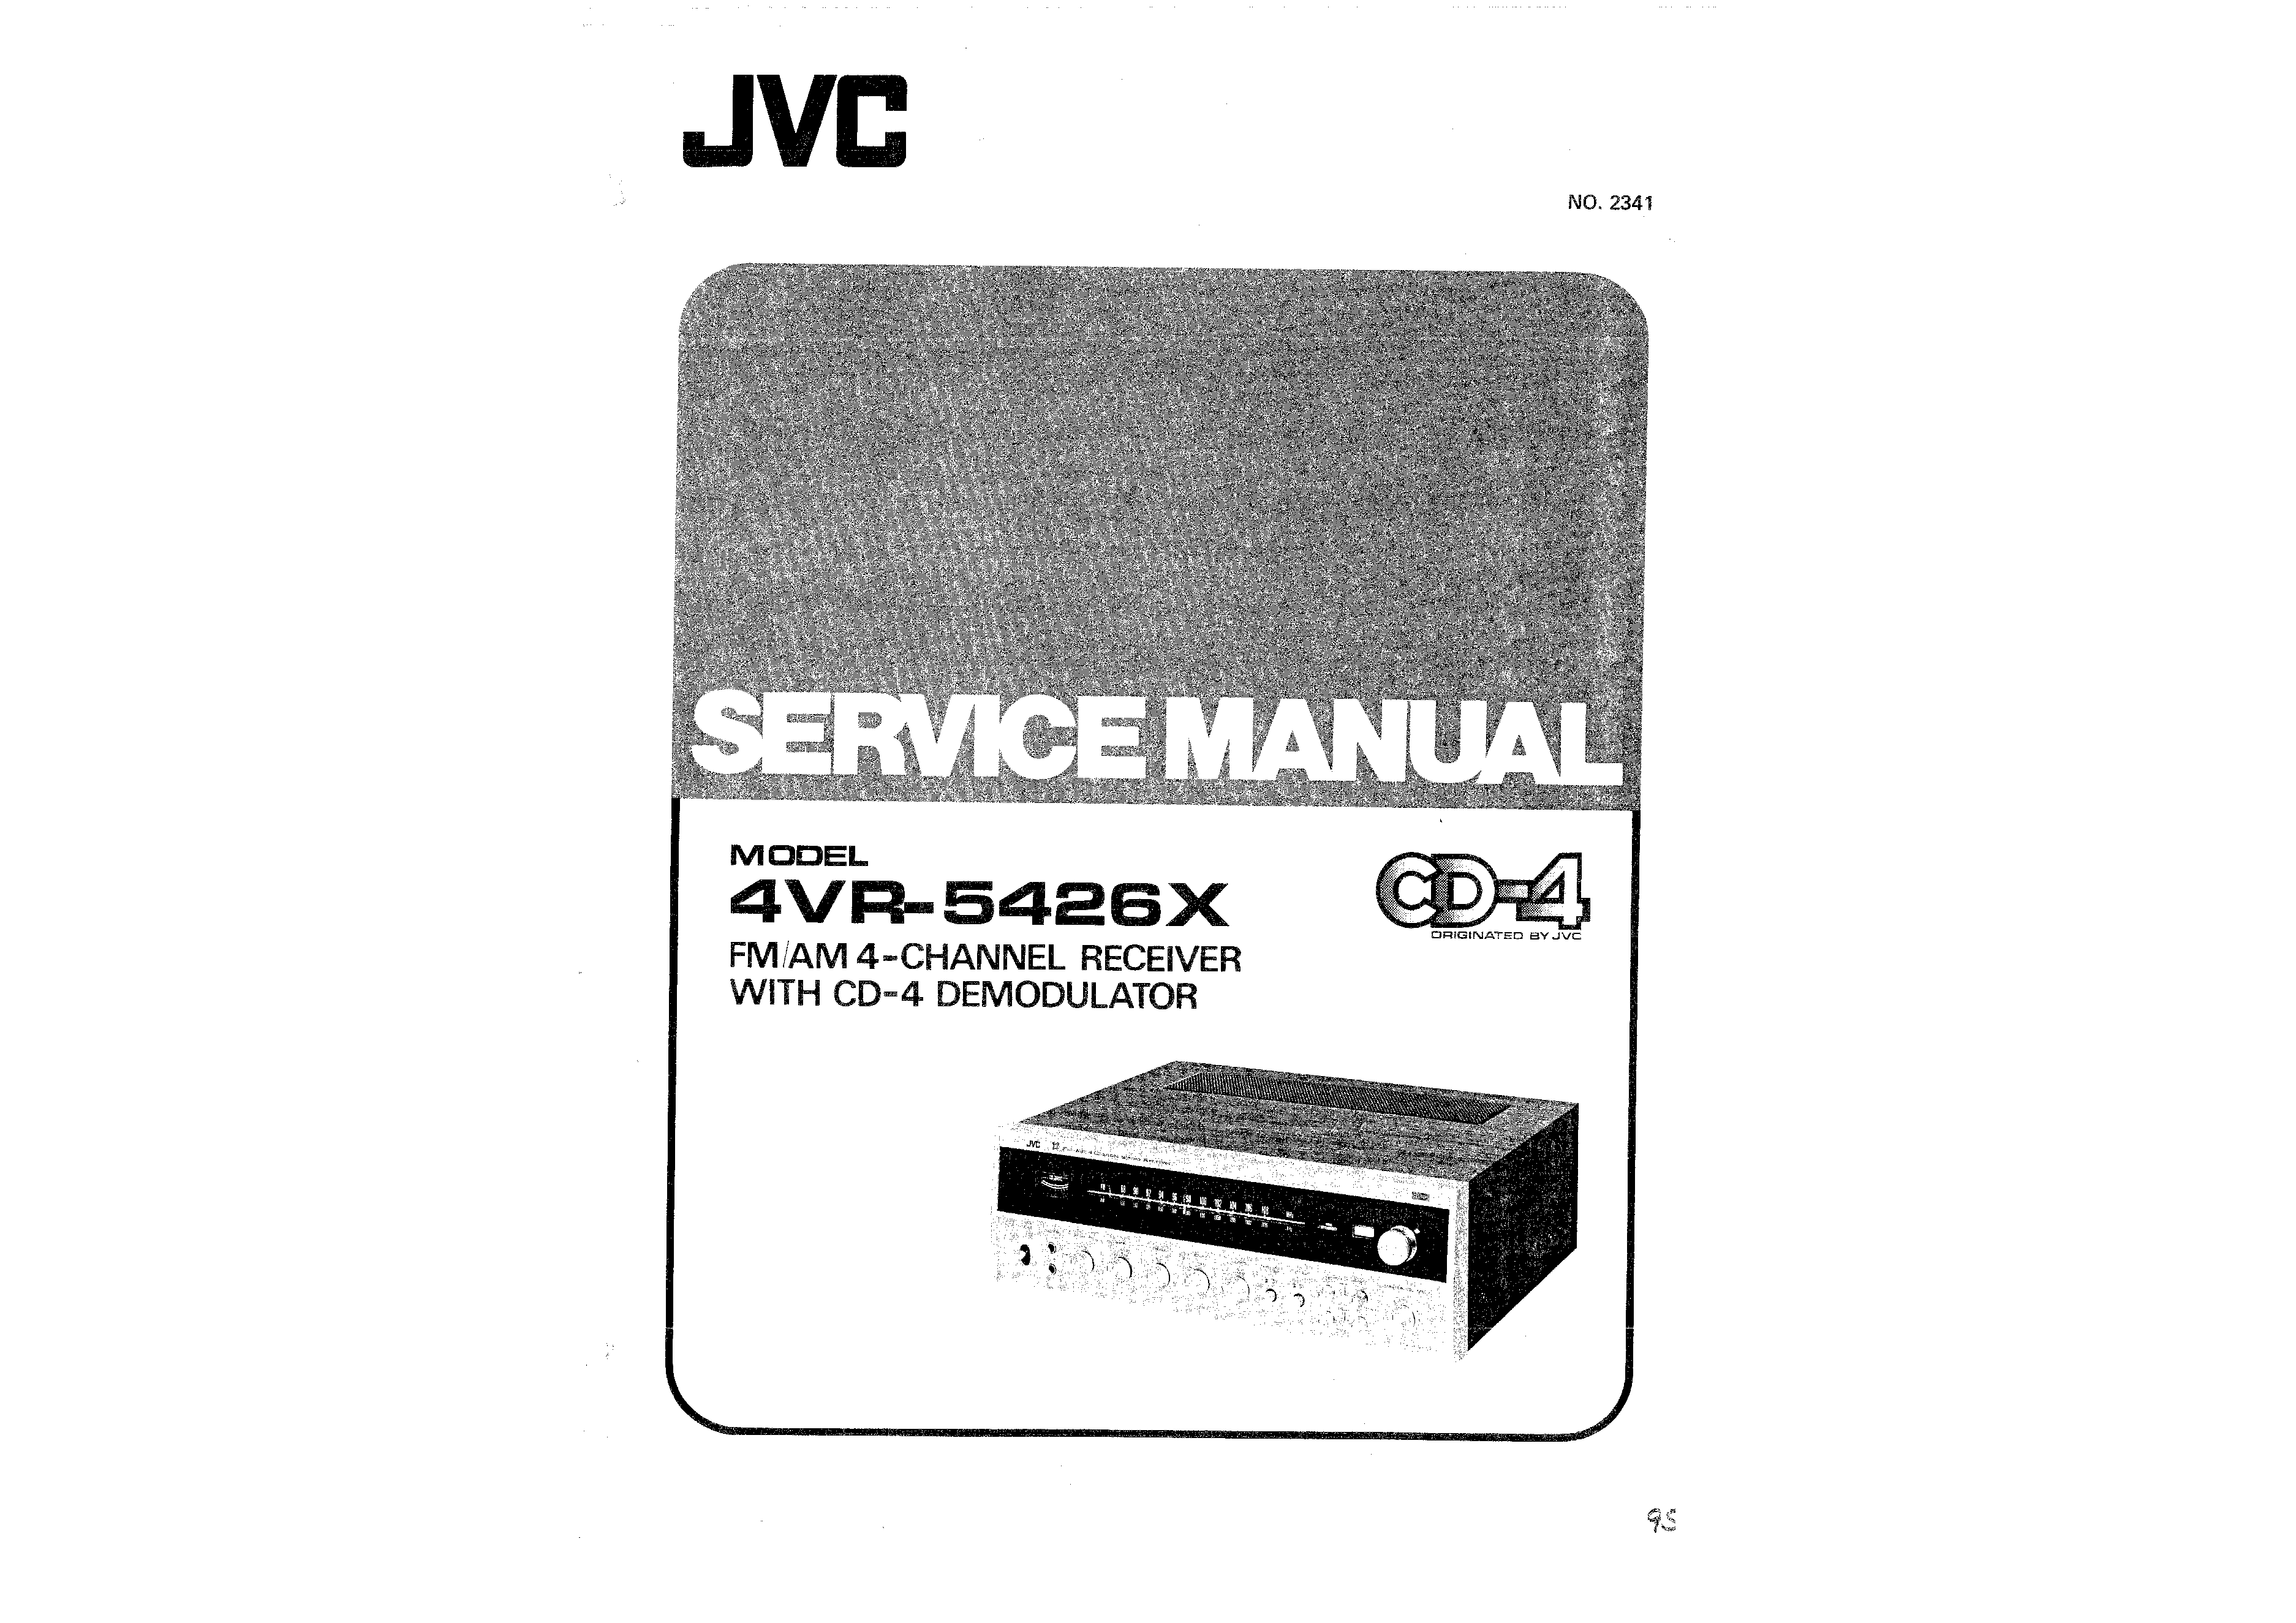 Service Manual-Anleitung für JVC 4VR-5415 